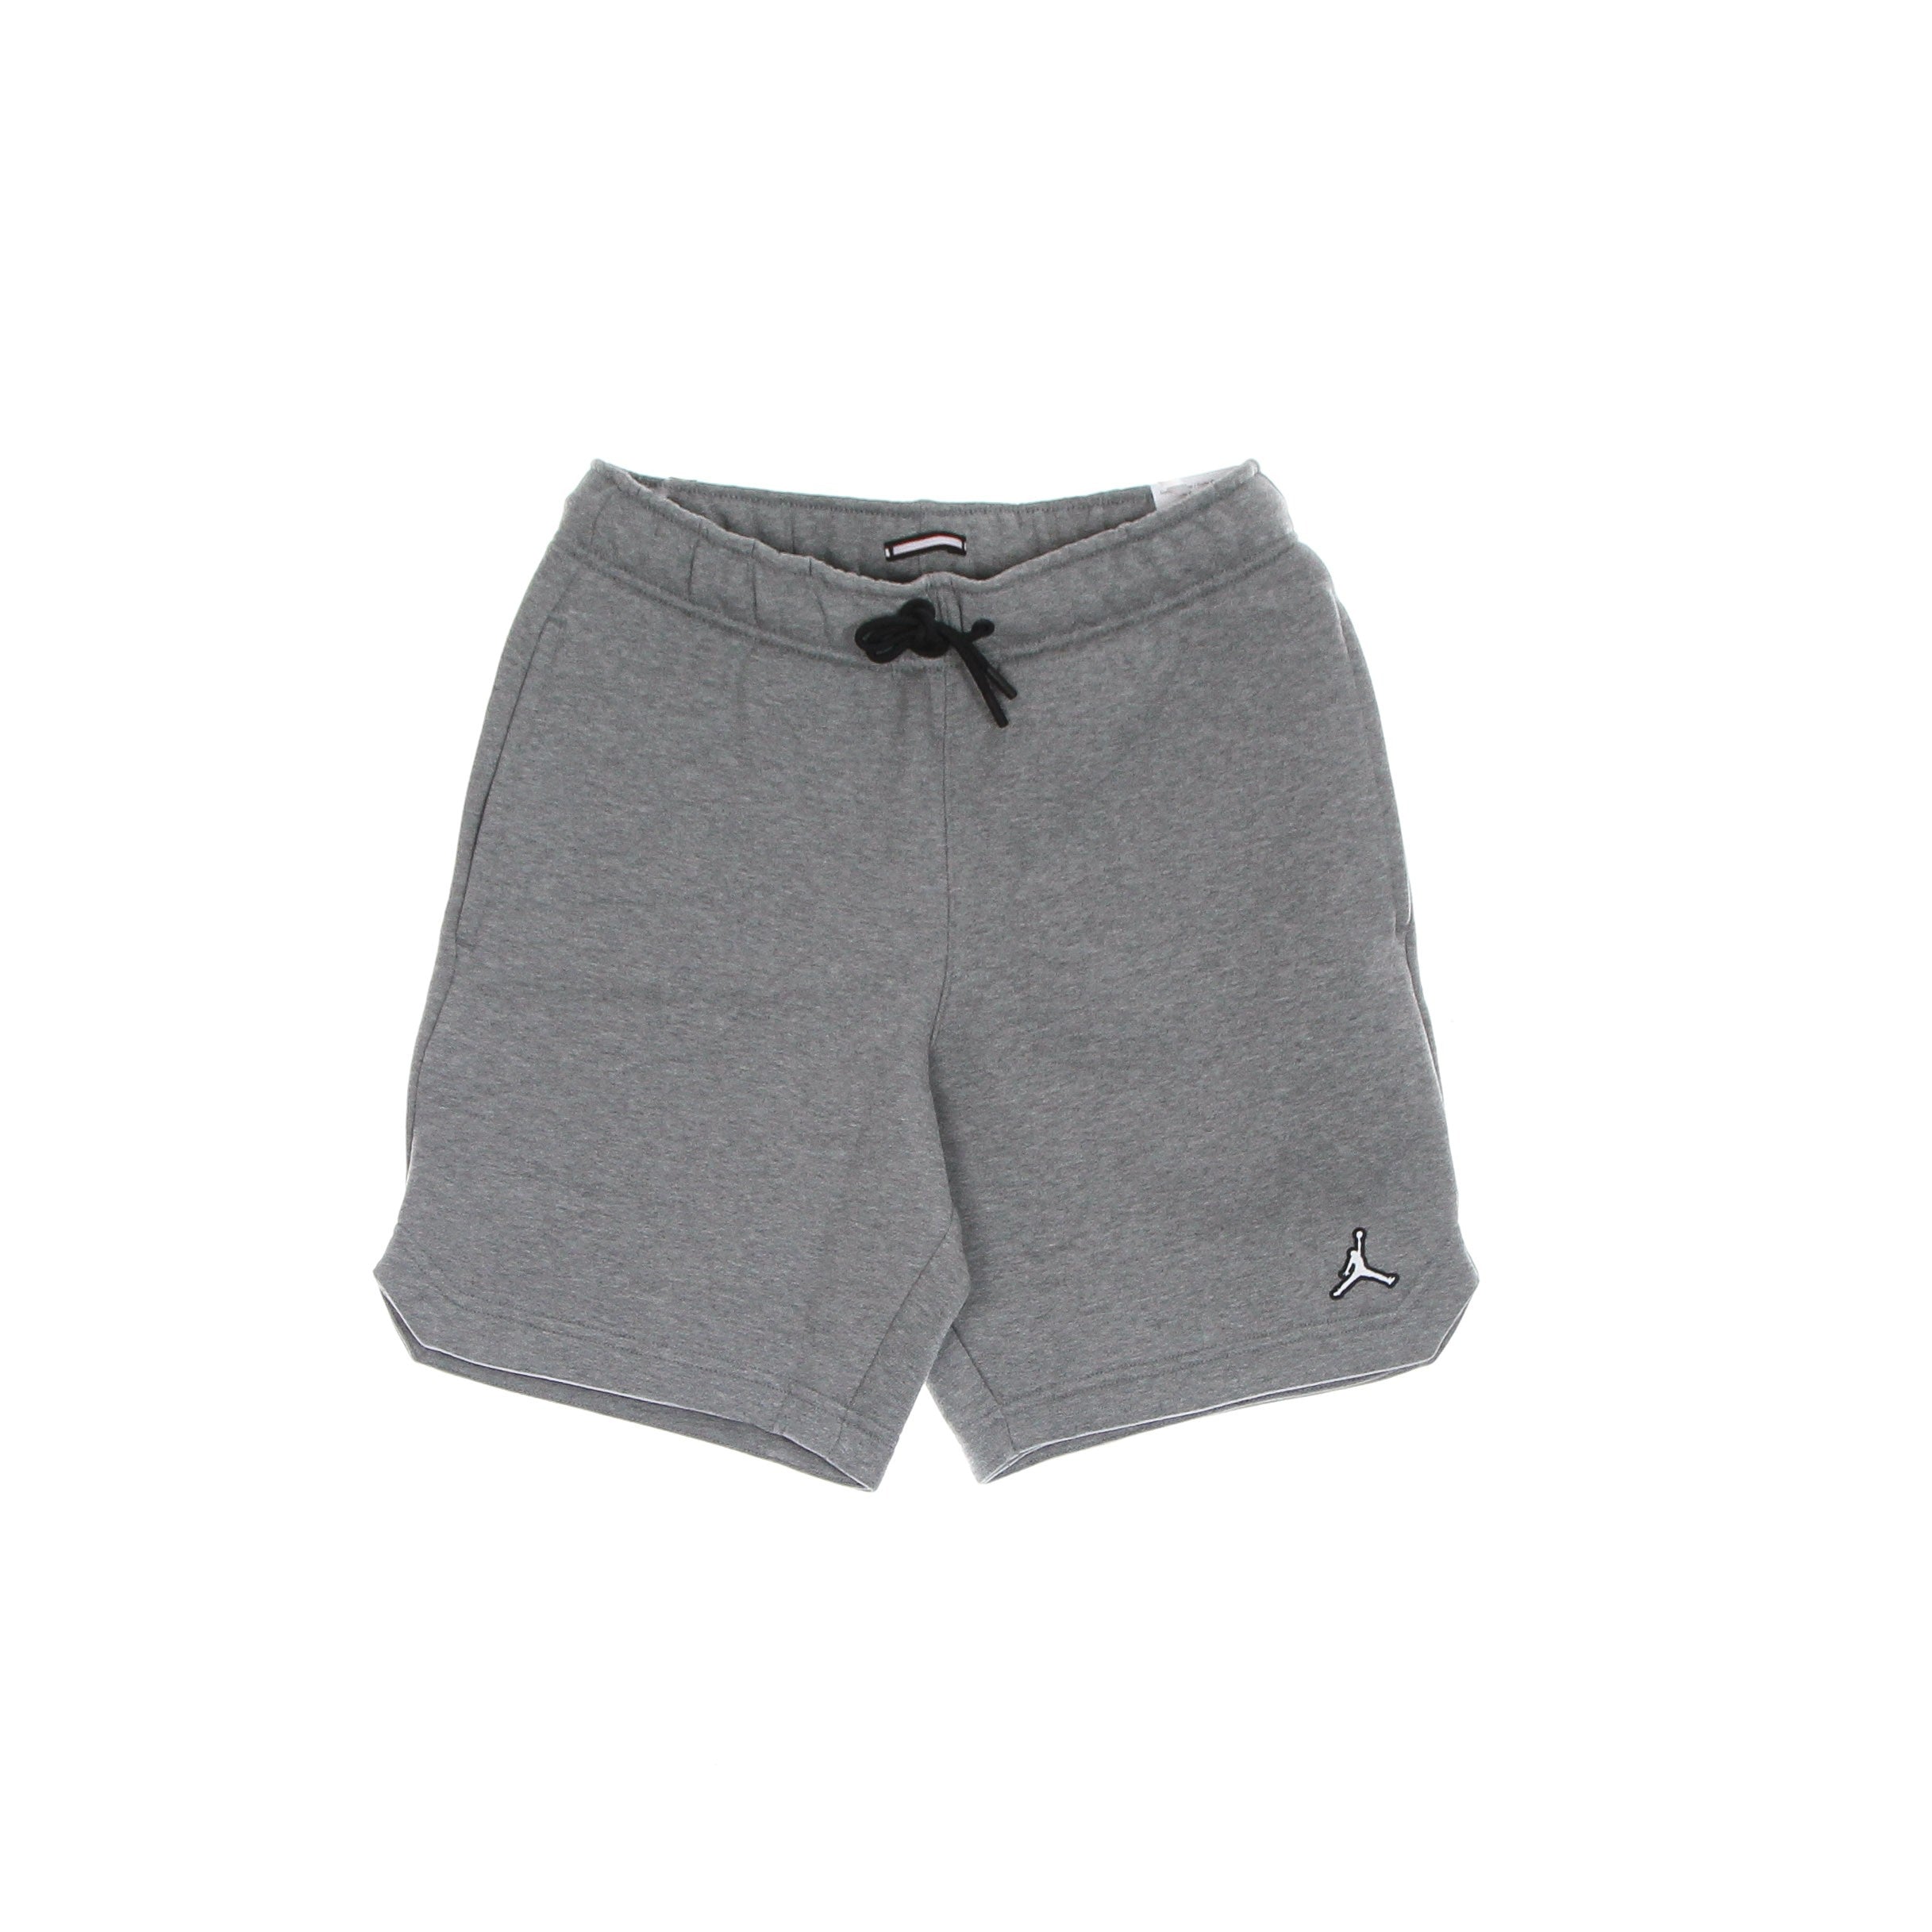 Jordan, Pantalone Corto Tuta Felpato Uomo Essentials Fleece Short, Carbon Heather/white